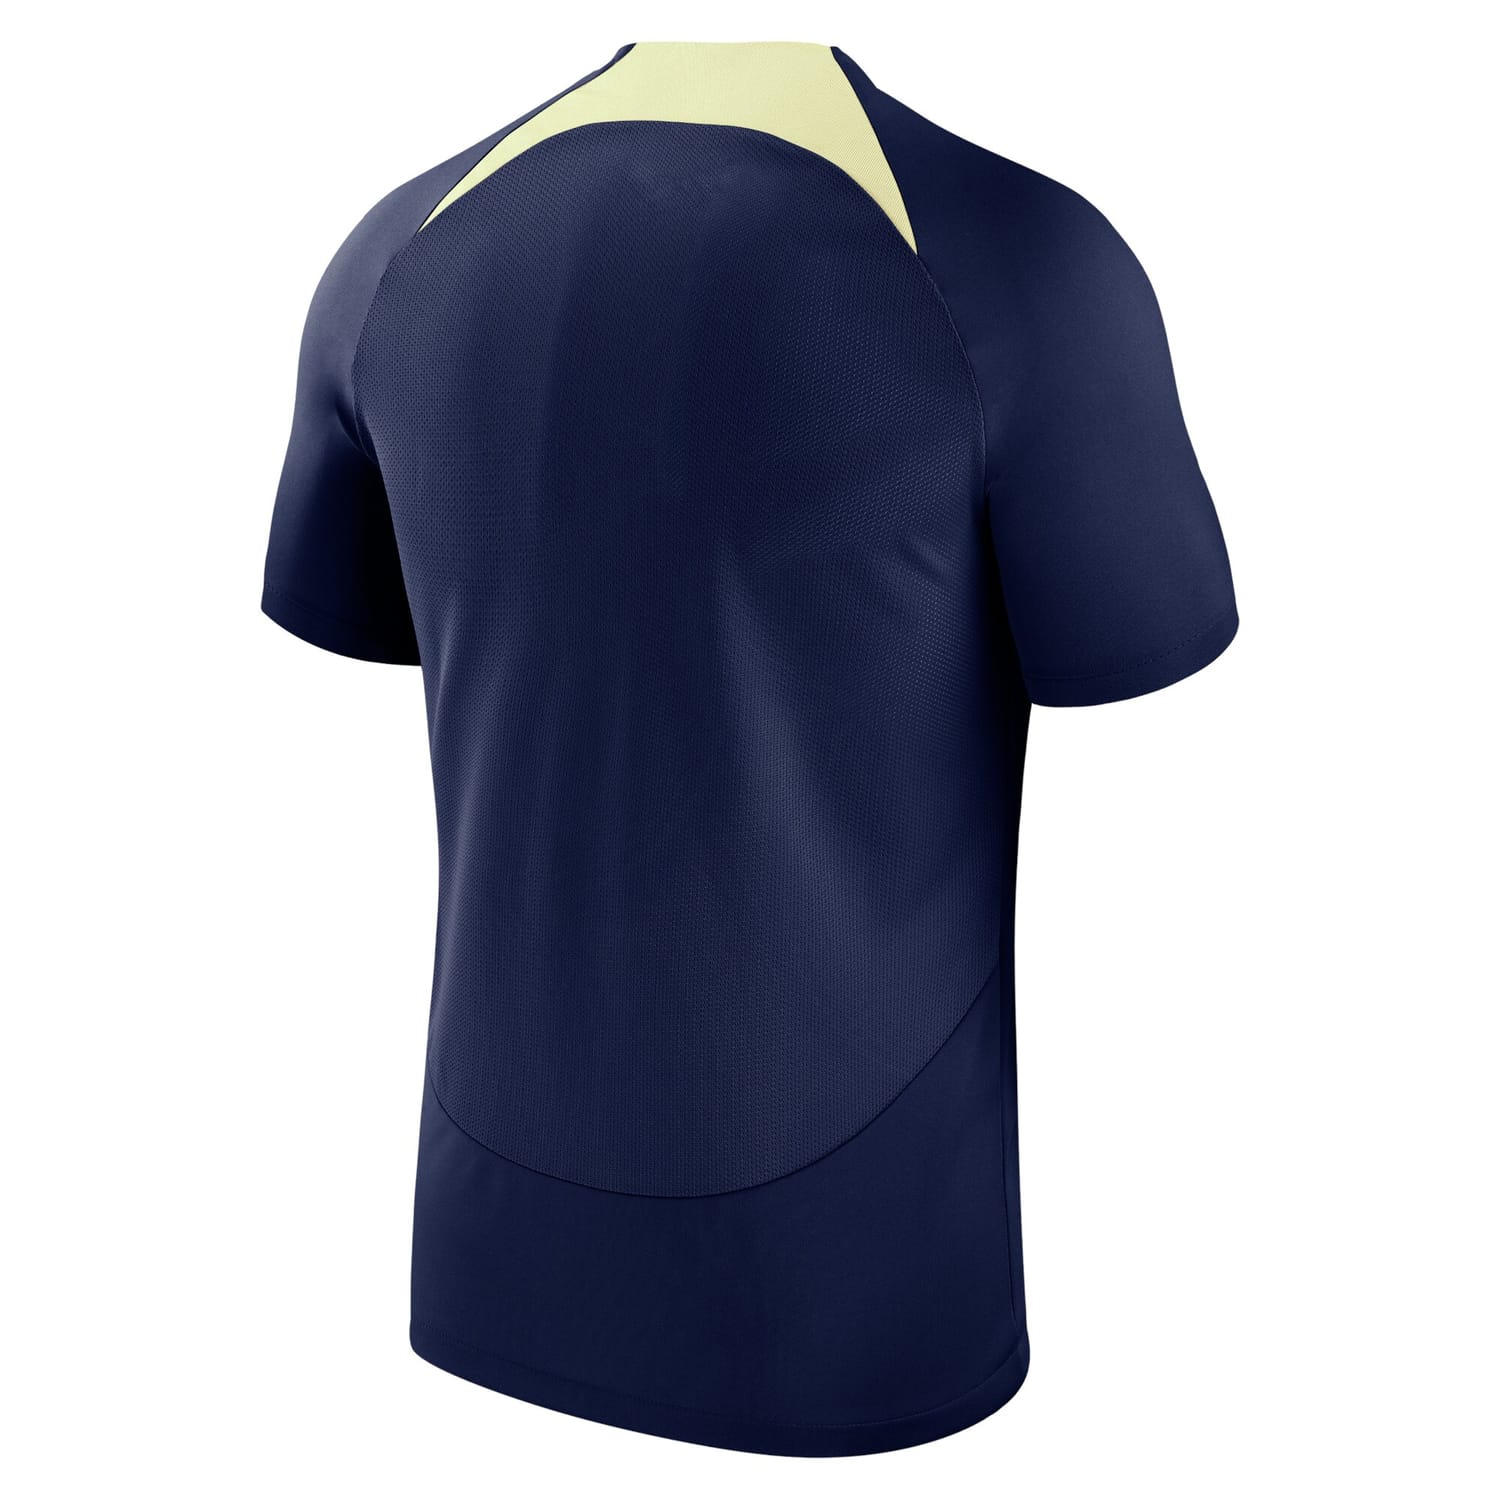 Liga MX Club America Pro Jersey Shirt Navy for Men